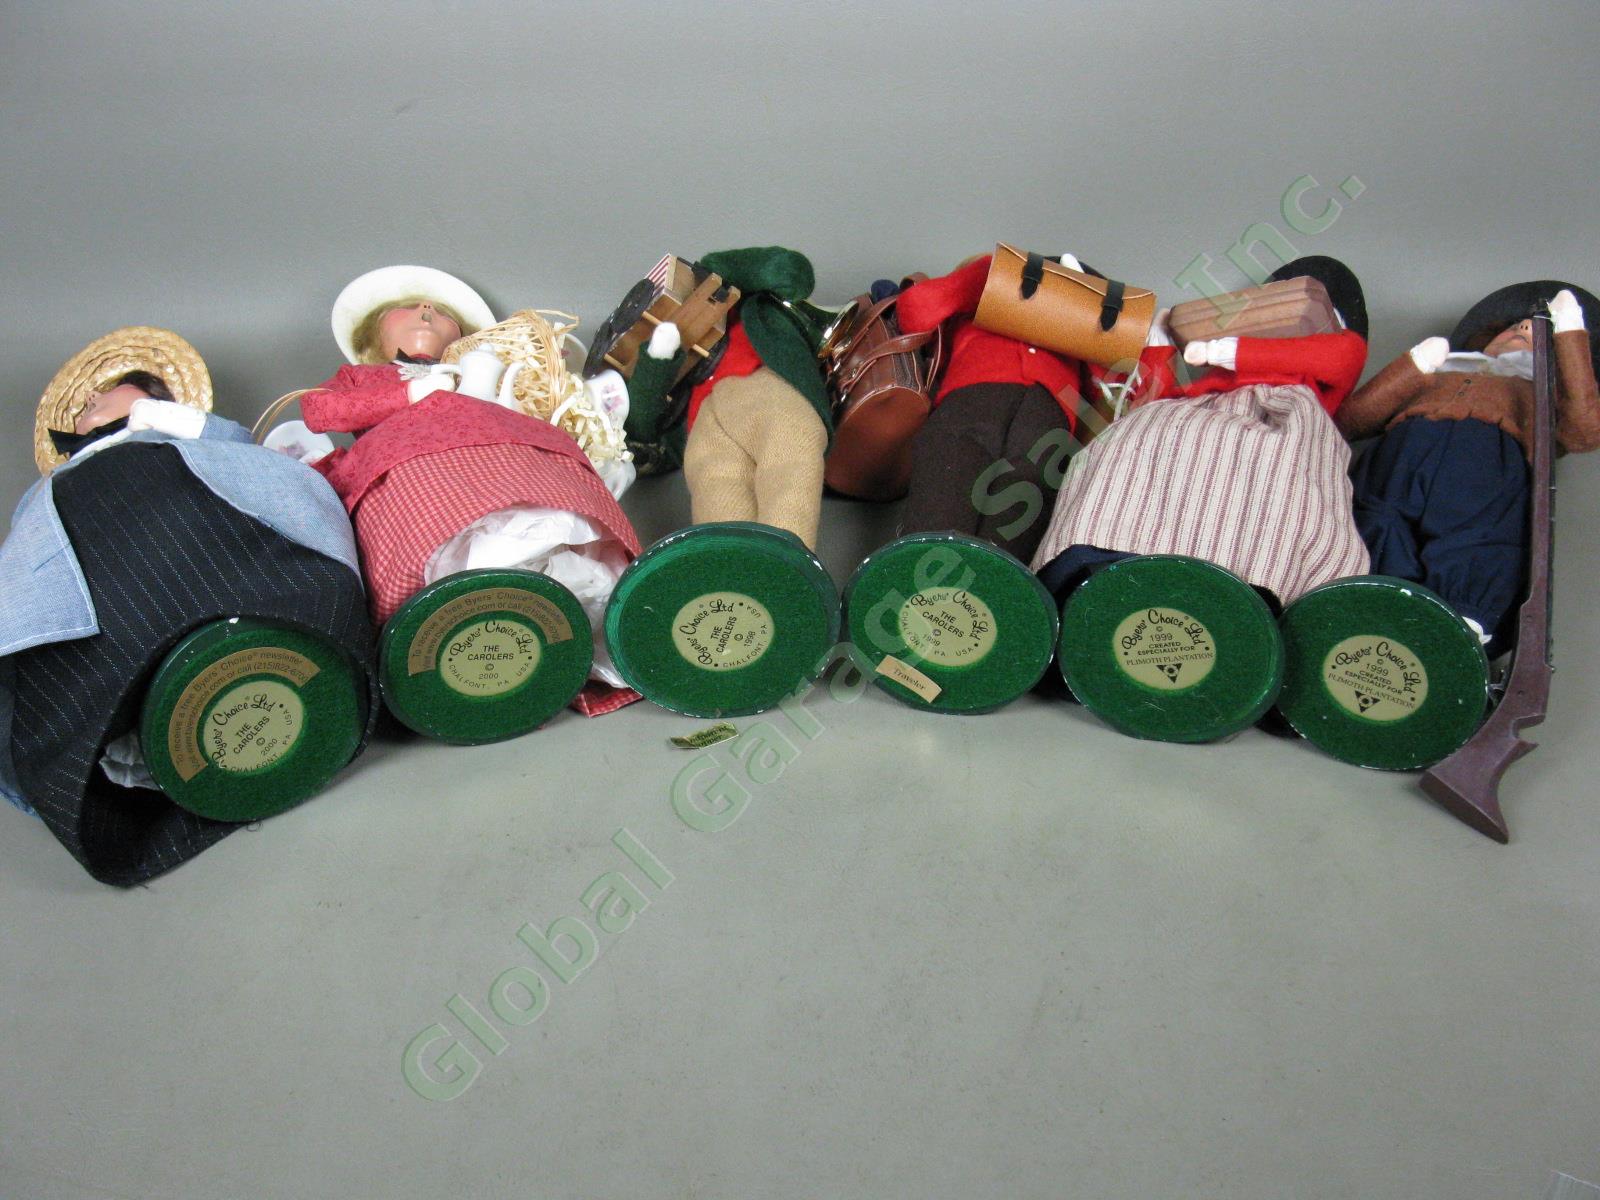 6 Vtg Byers Choice Caroler Man Woman Figurine Figure Collection Lot 1998-2000 NR 4